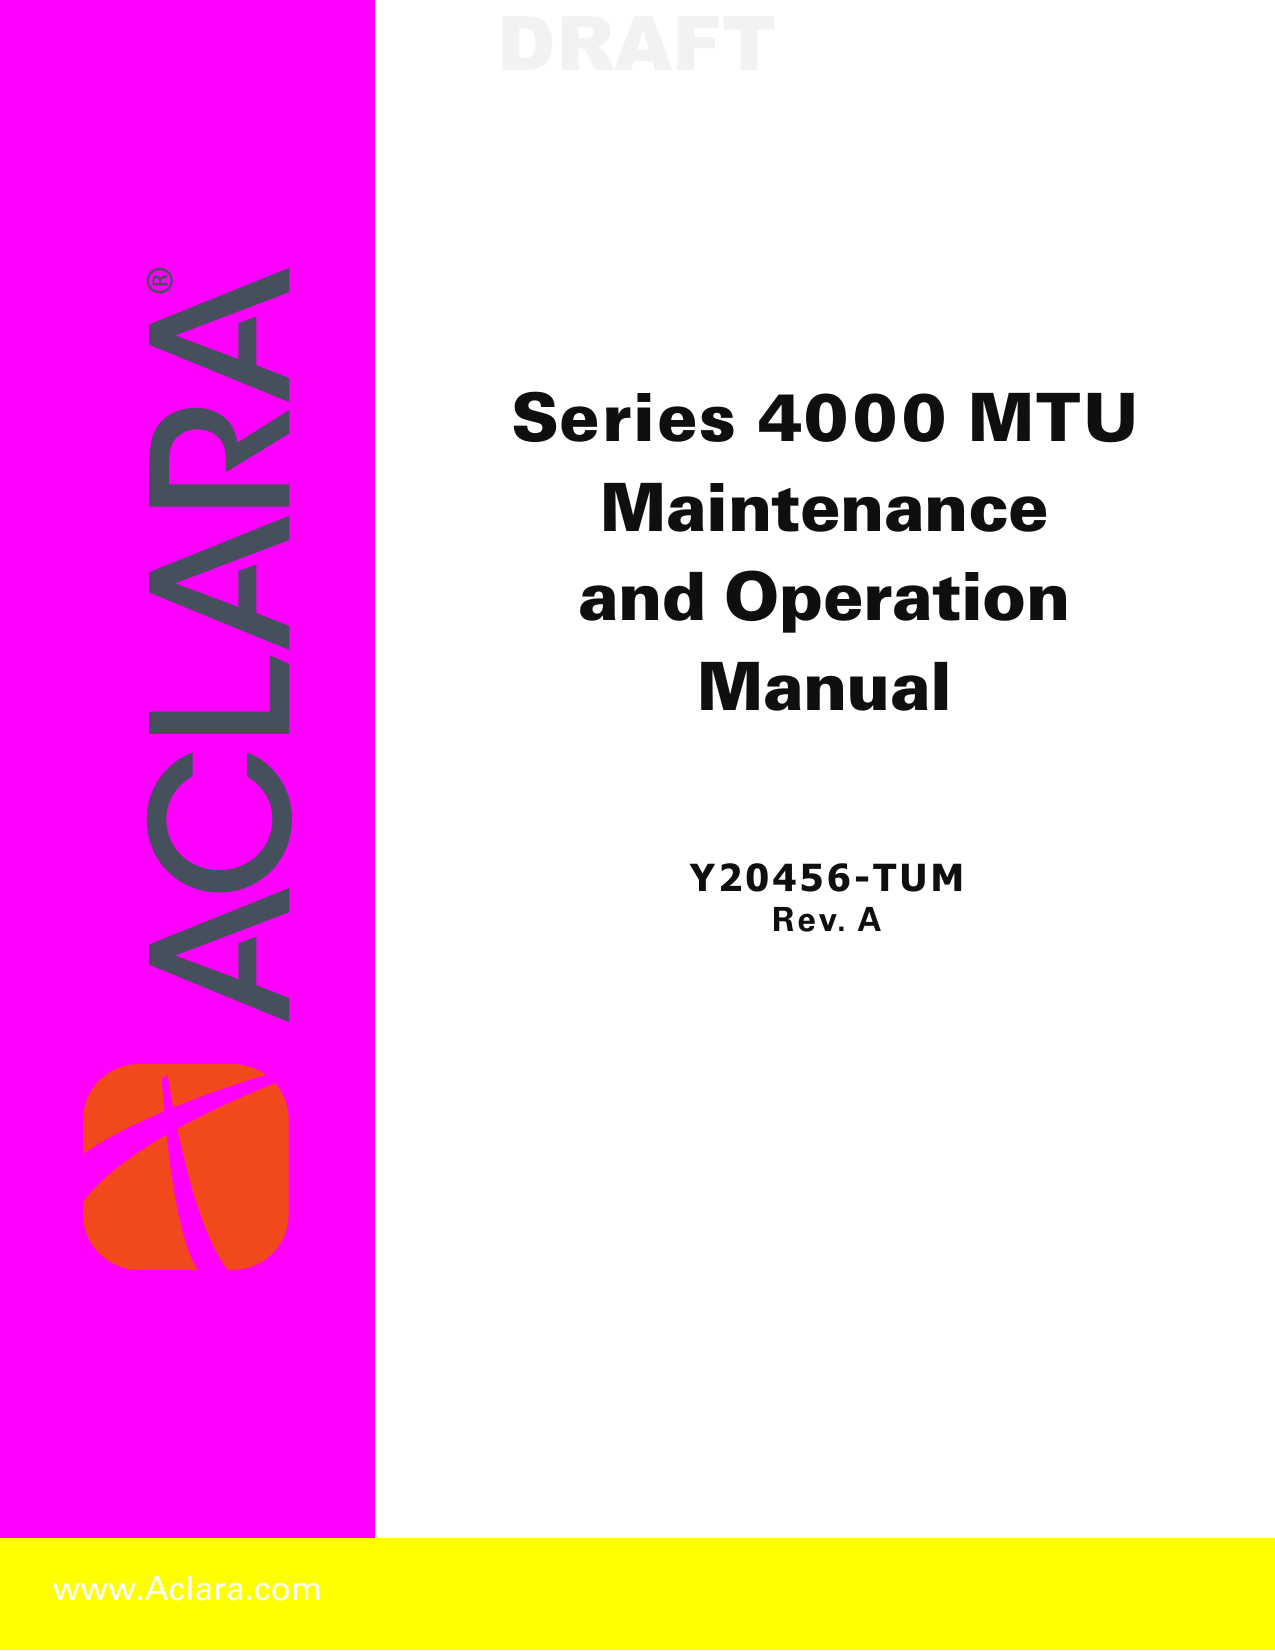 www.Aclara.comSeries 4000 MTUMaintenanceand OperationManualY20456-TUMRev. ADRAFT